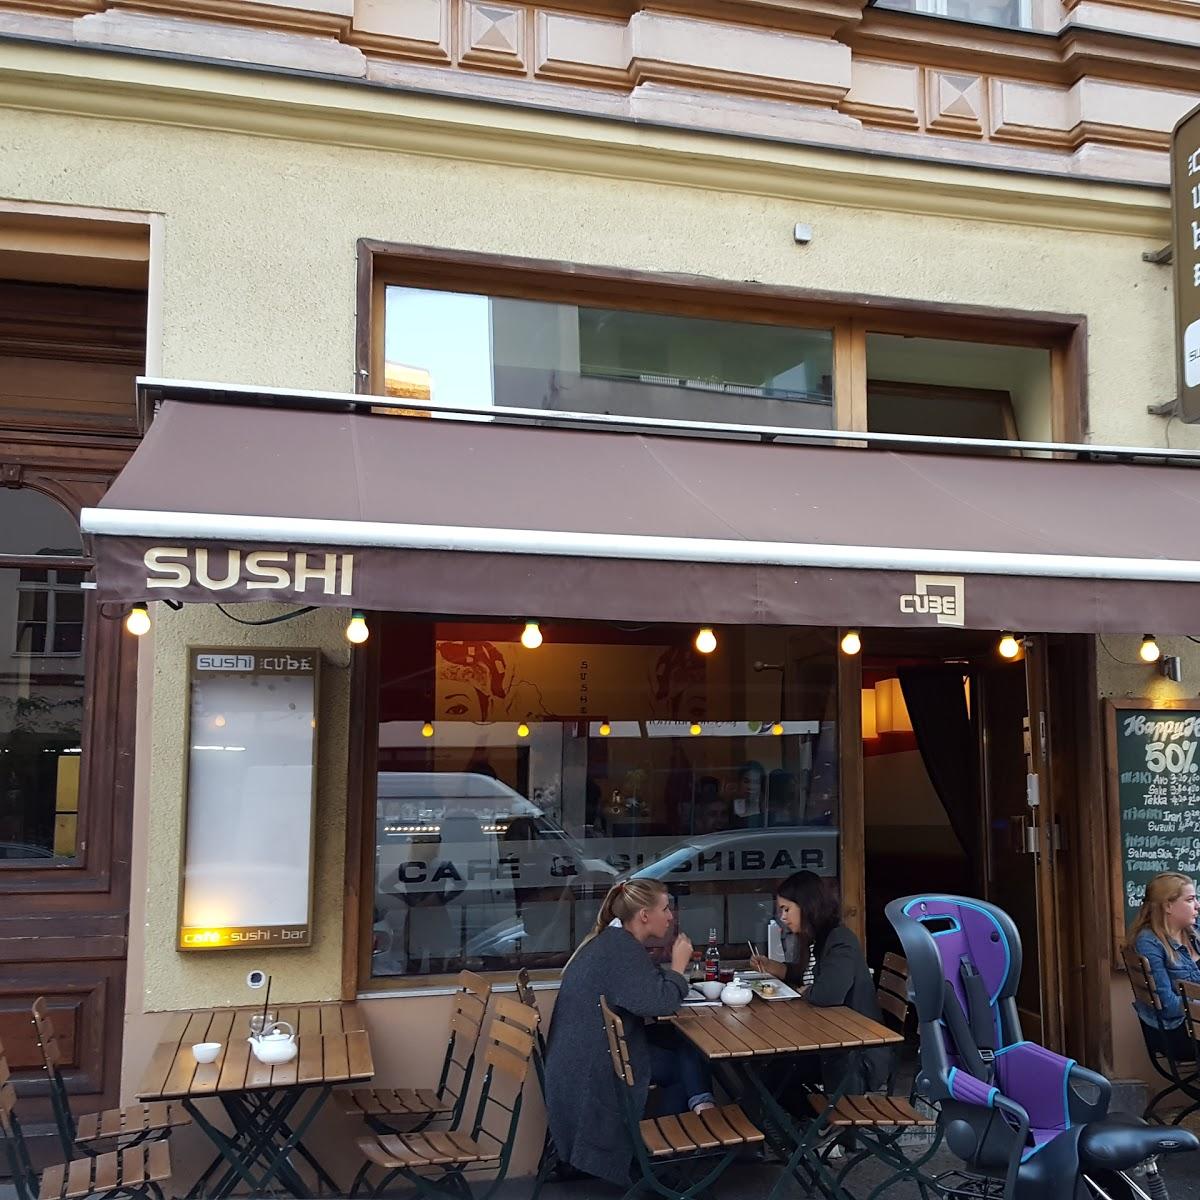 Restaurant "Sushi Cube" in Berlin